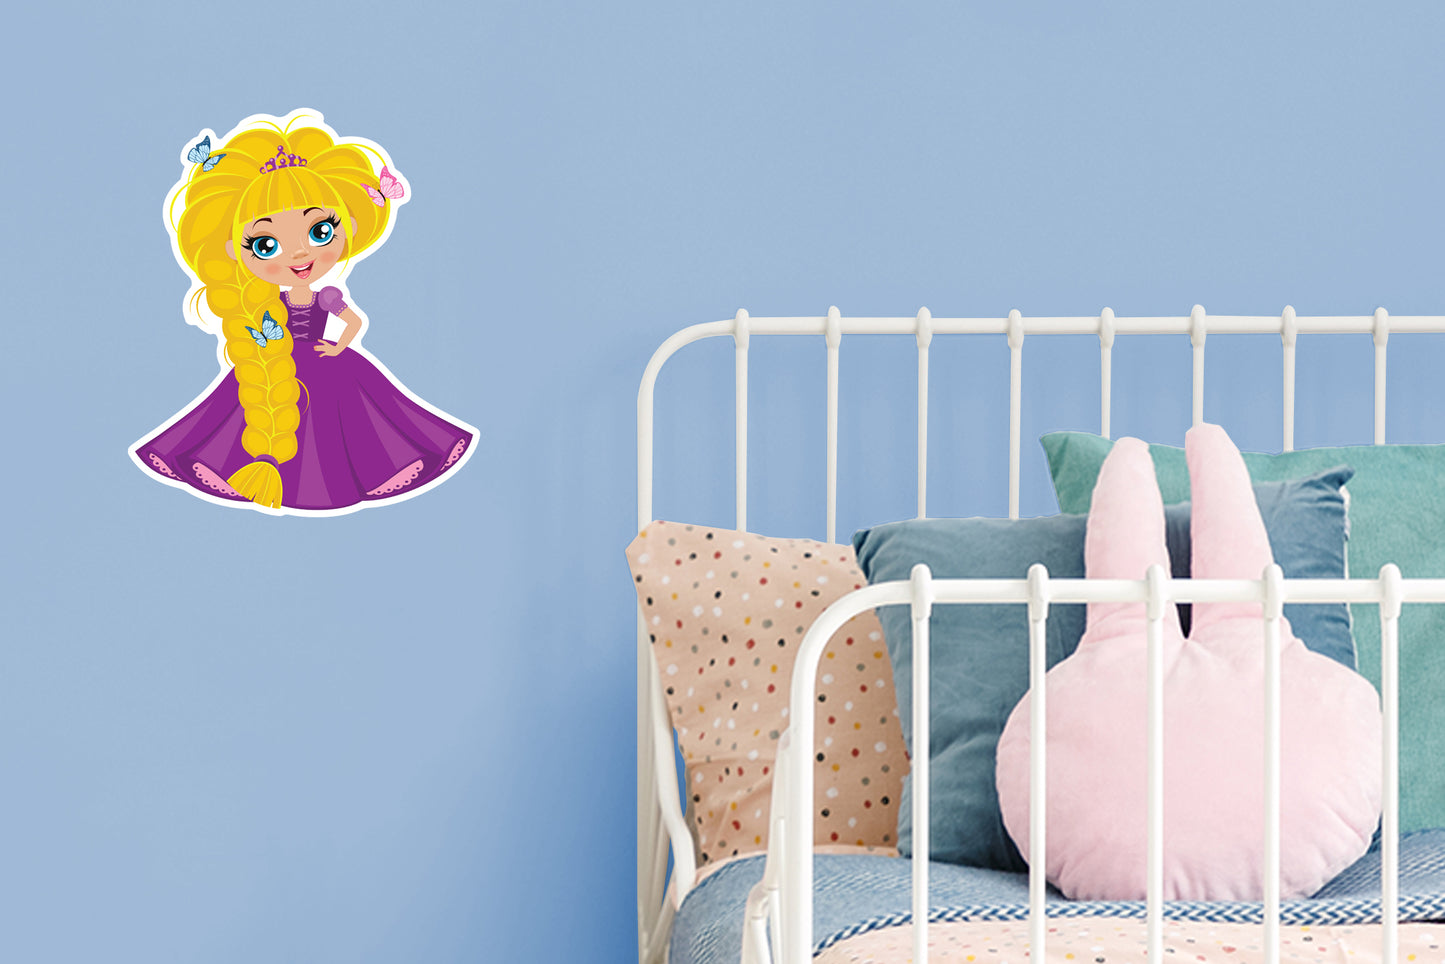 Nursery: Princess Violet Dress Character        -   Removable Wall   Adhesive Decal